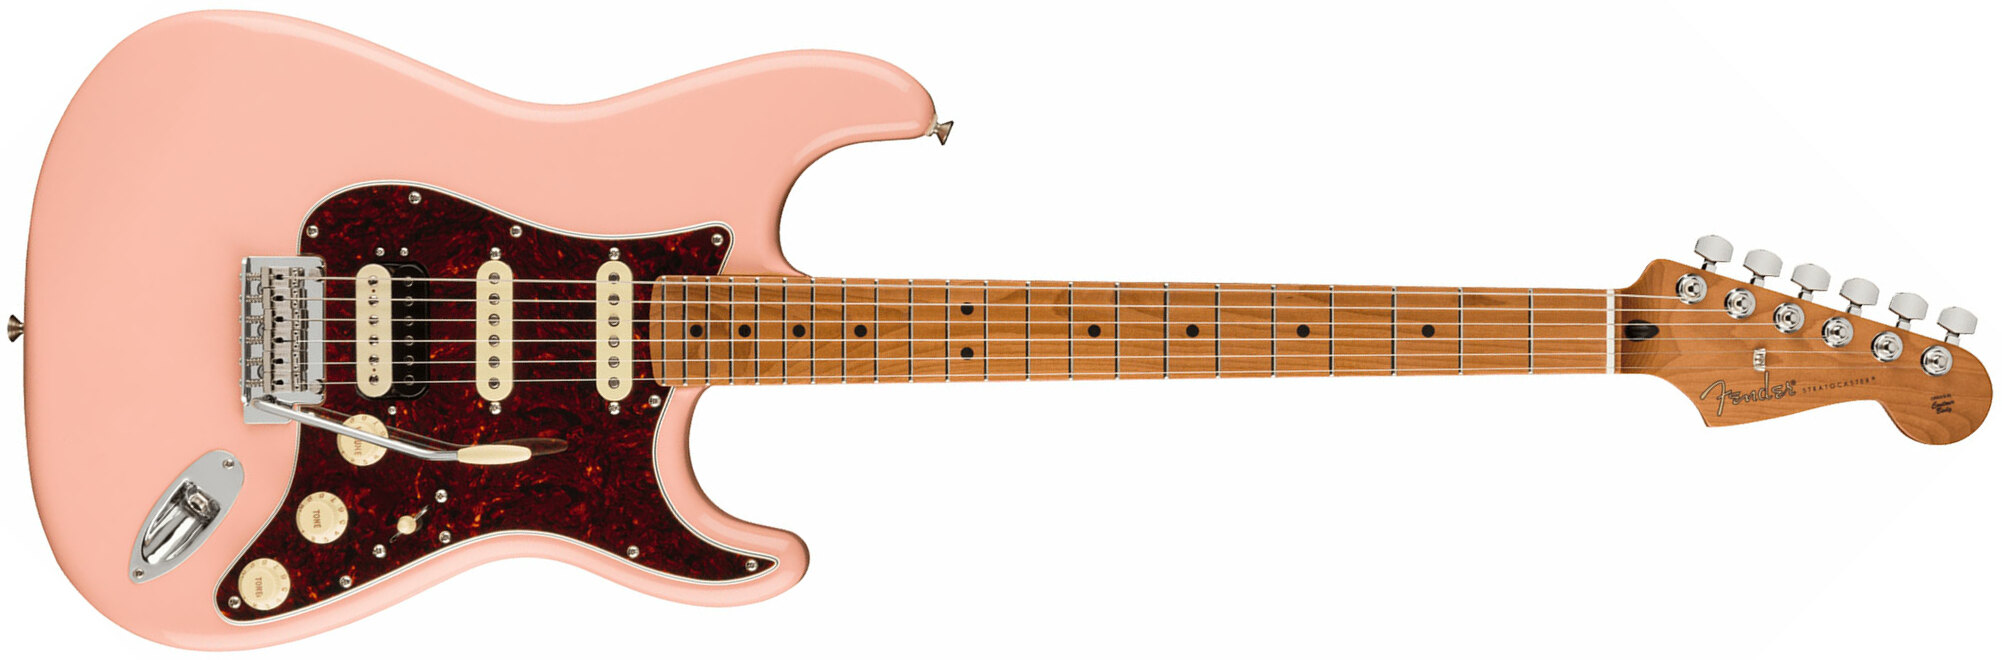 Fender Strat Player Roasted Neck Ltd Mex Hss Trem Mn - Shell Pink - Guitare Électrique Forme Str - Main picture